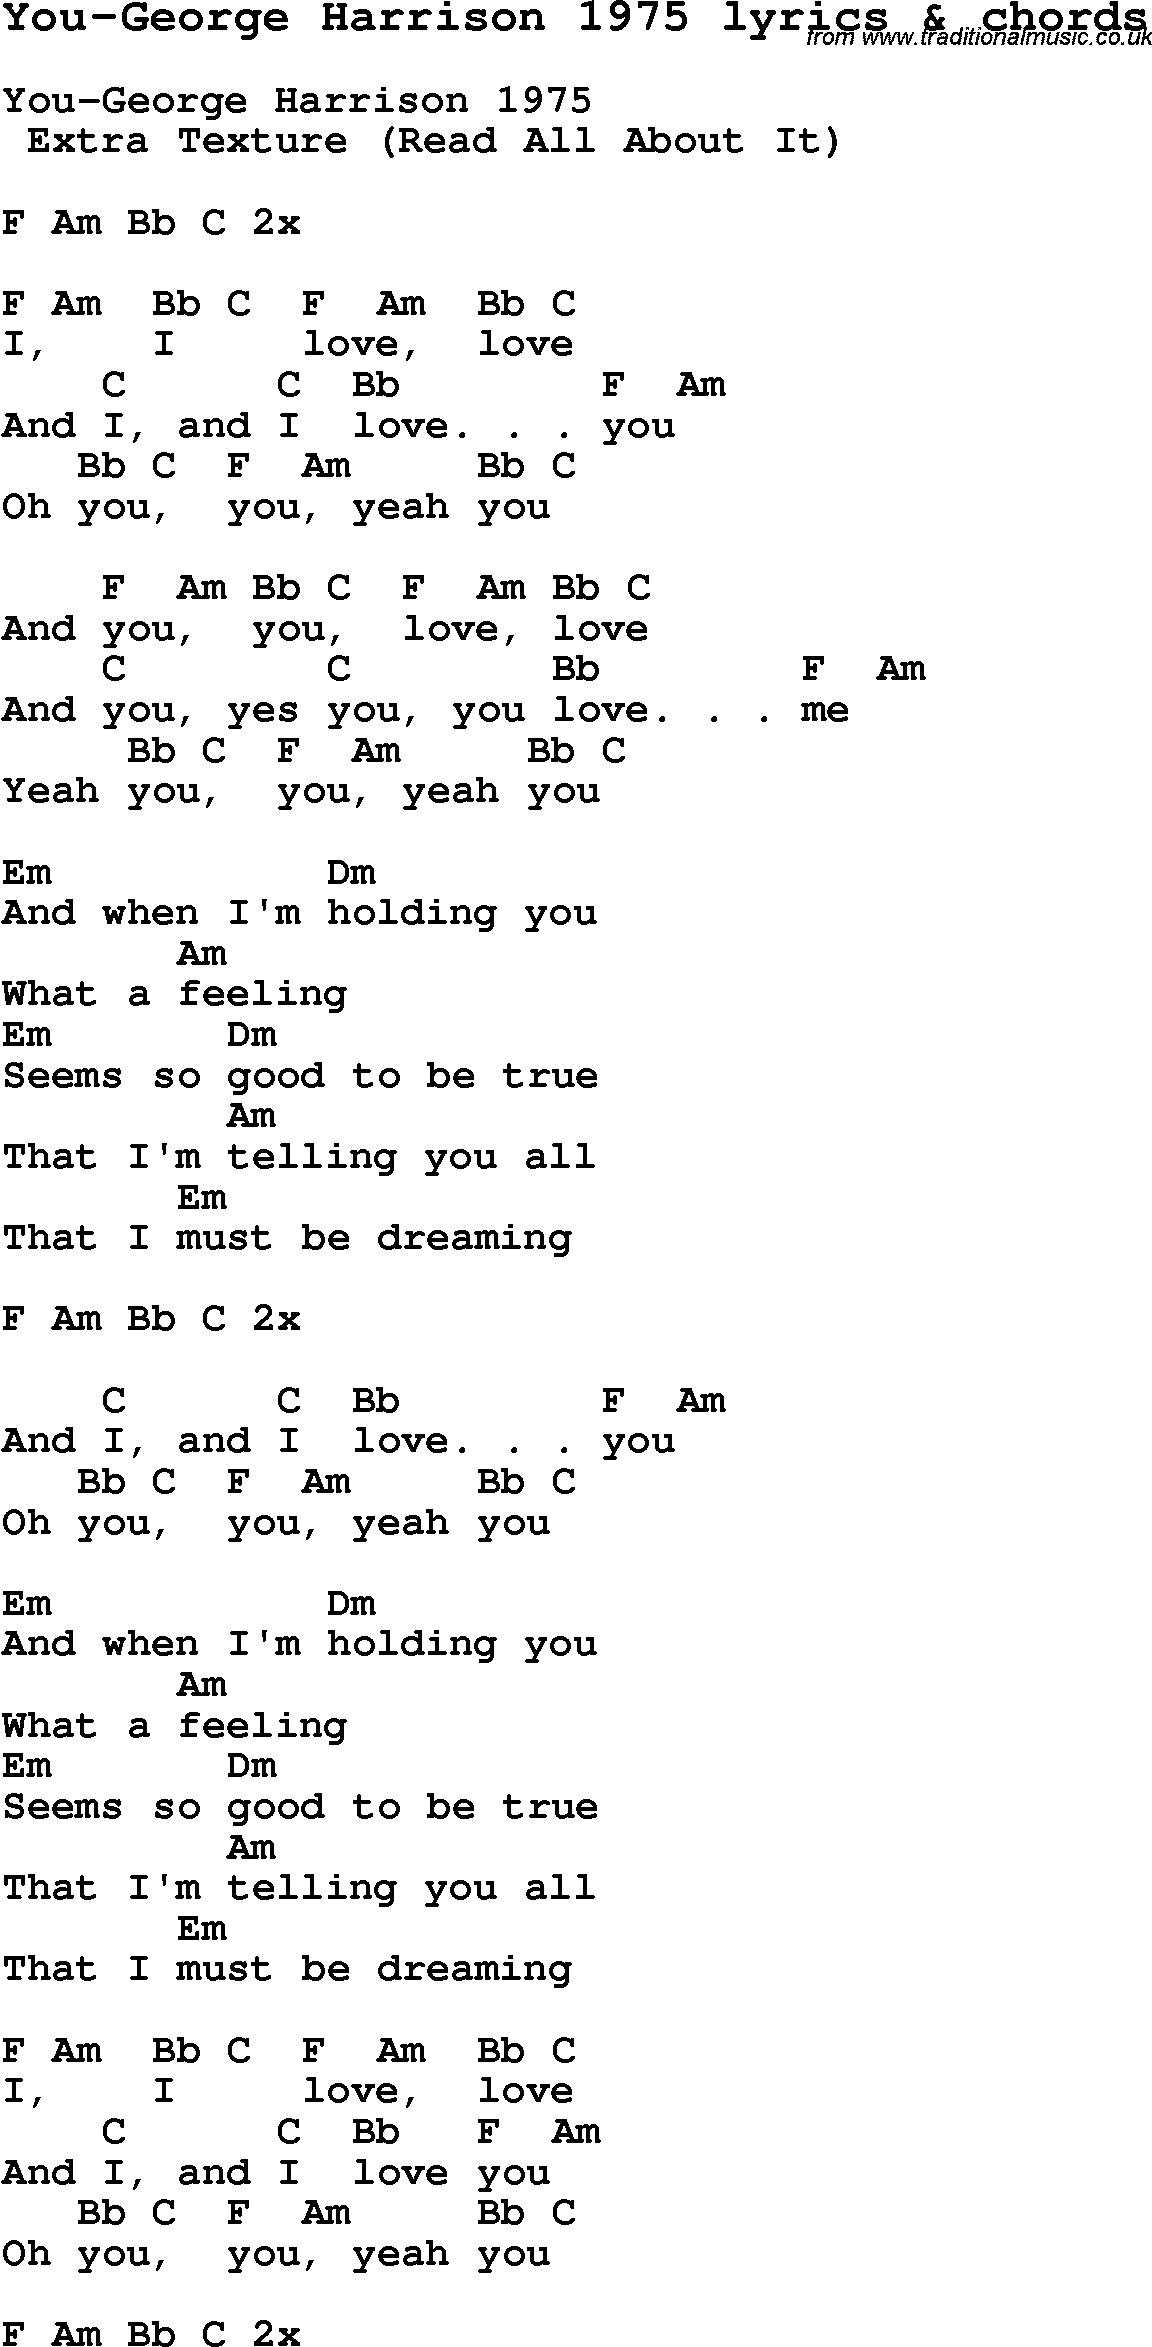 Love Song Lyrics for: You-George Harrison 1975 with chords for Ukulele, Guitar Banjo etc.